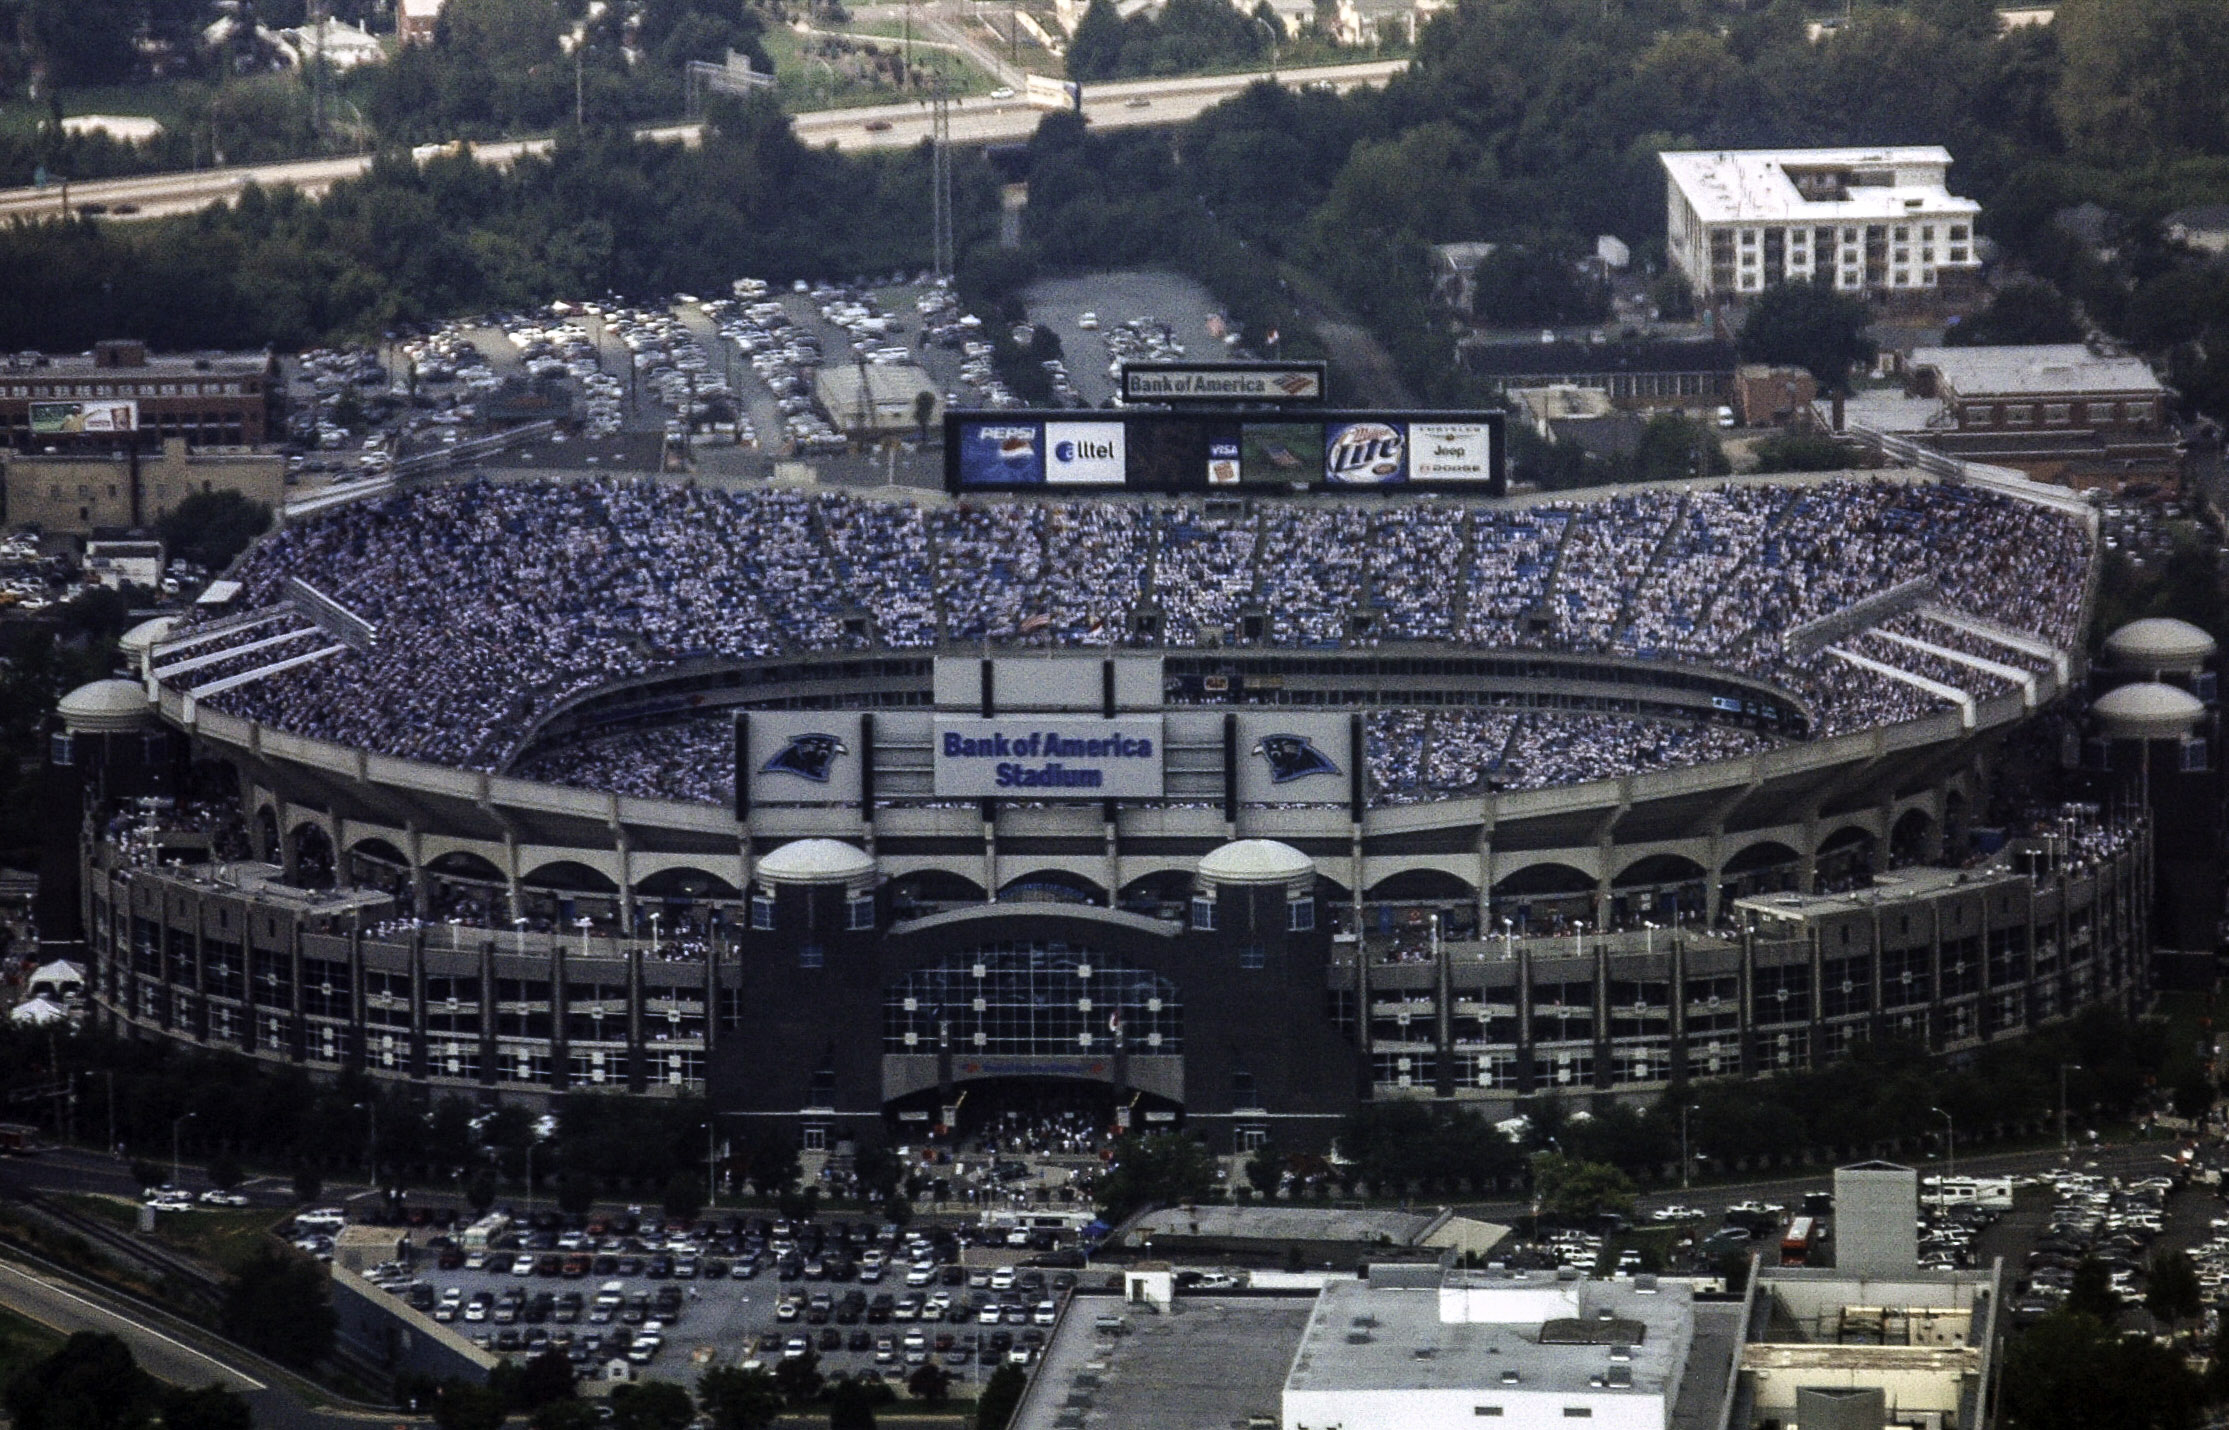 The Bank of America Stadium in Charlotte, North Carolina image - Free ...